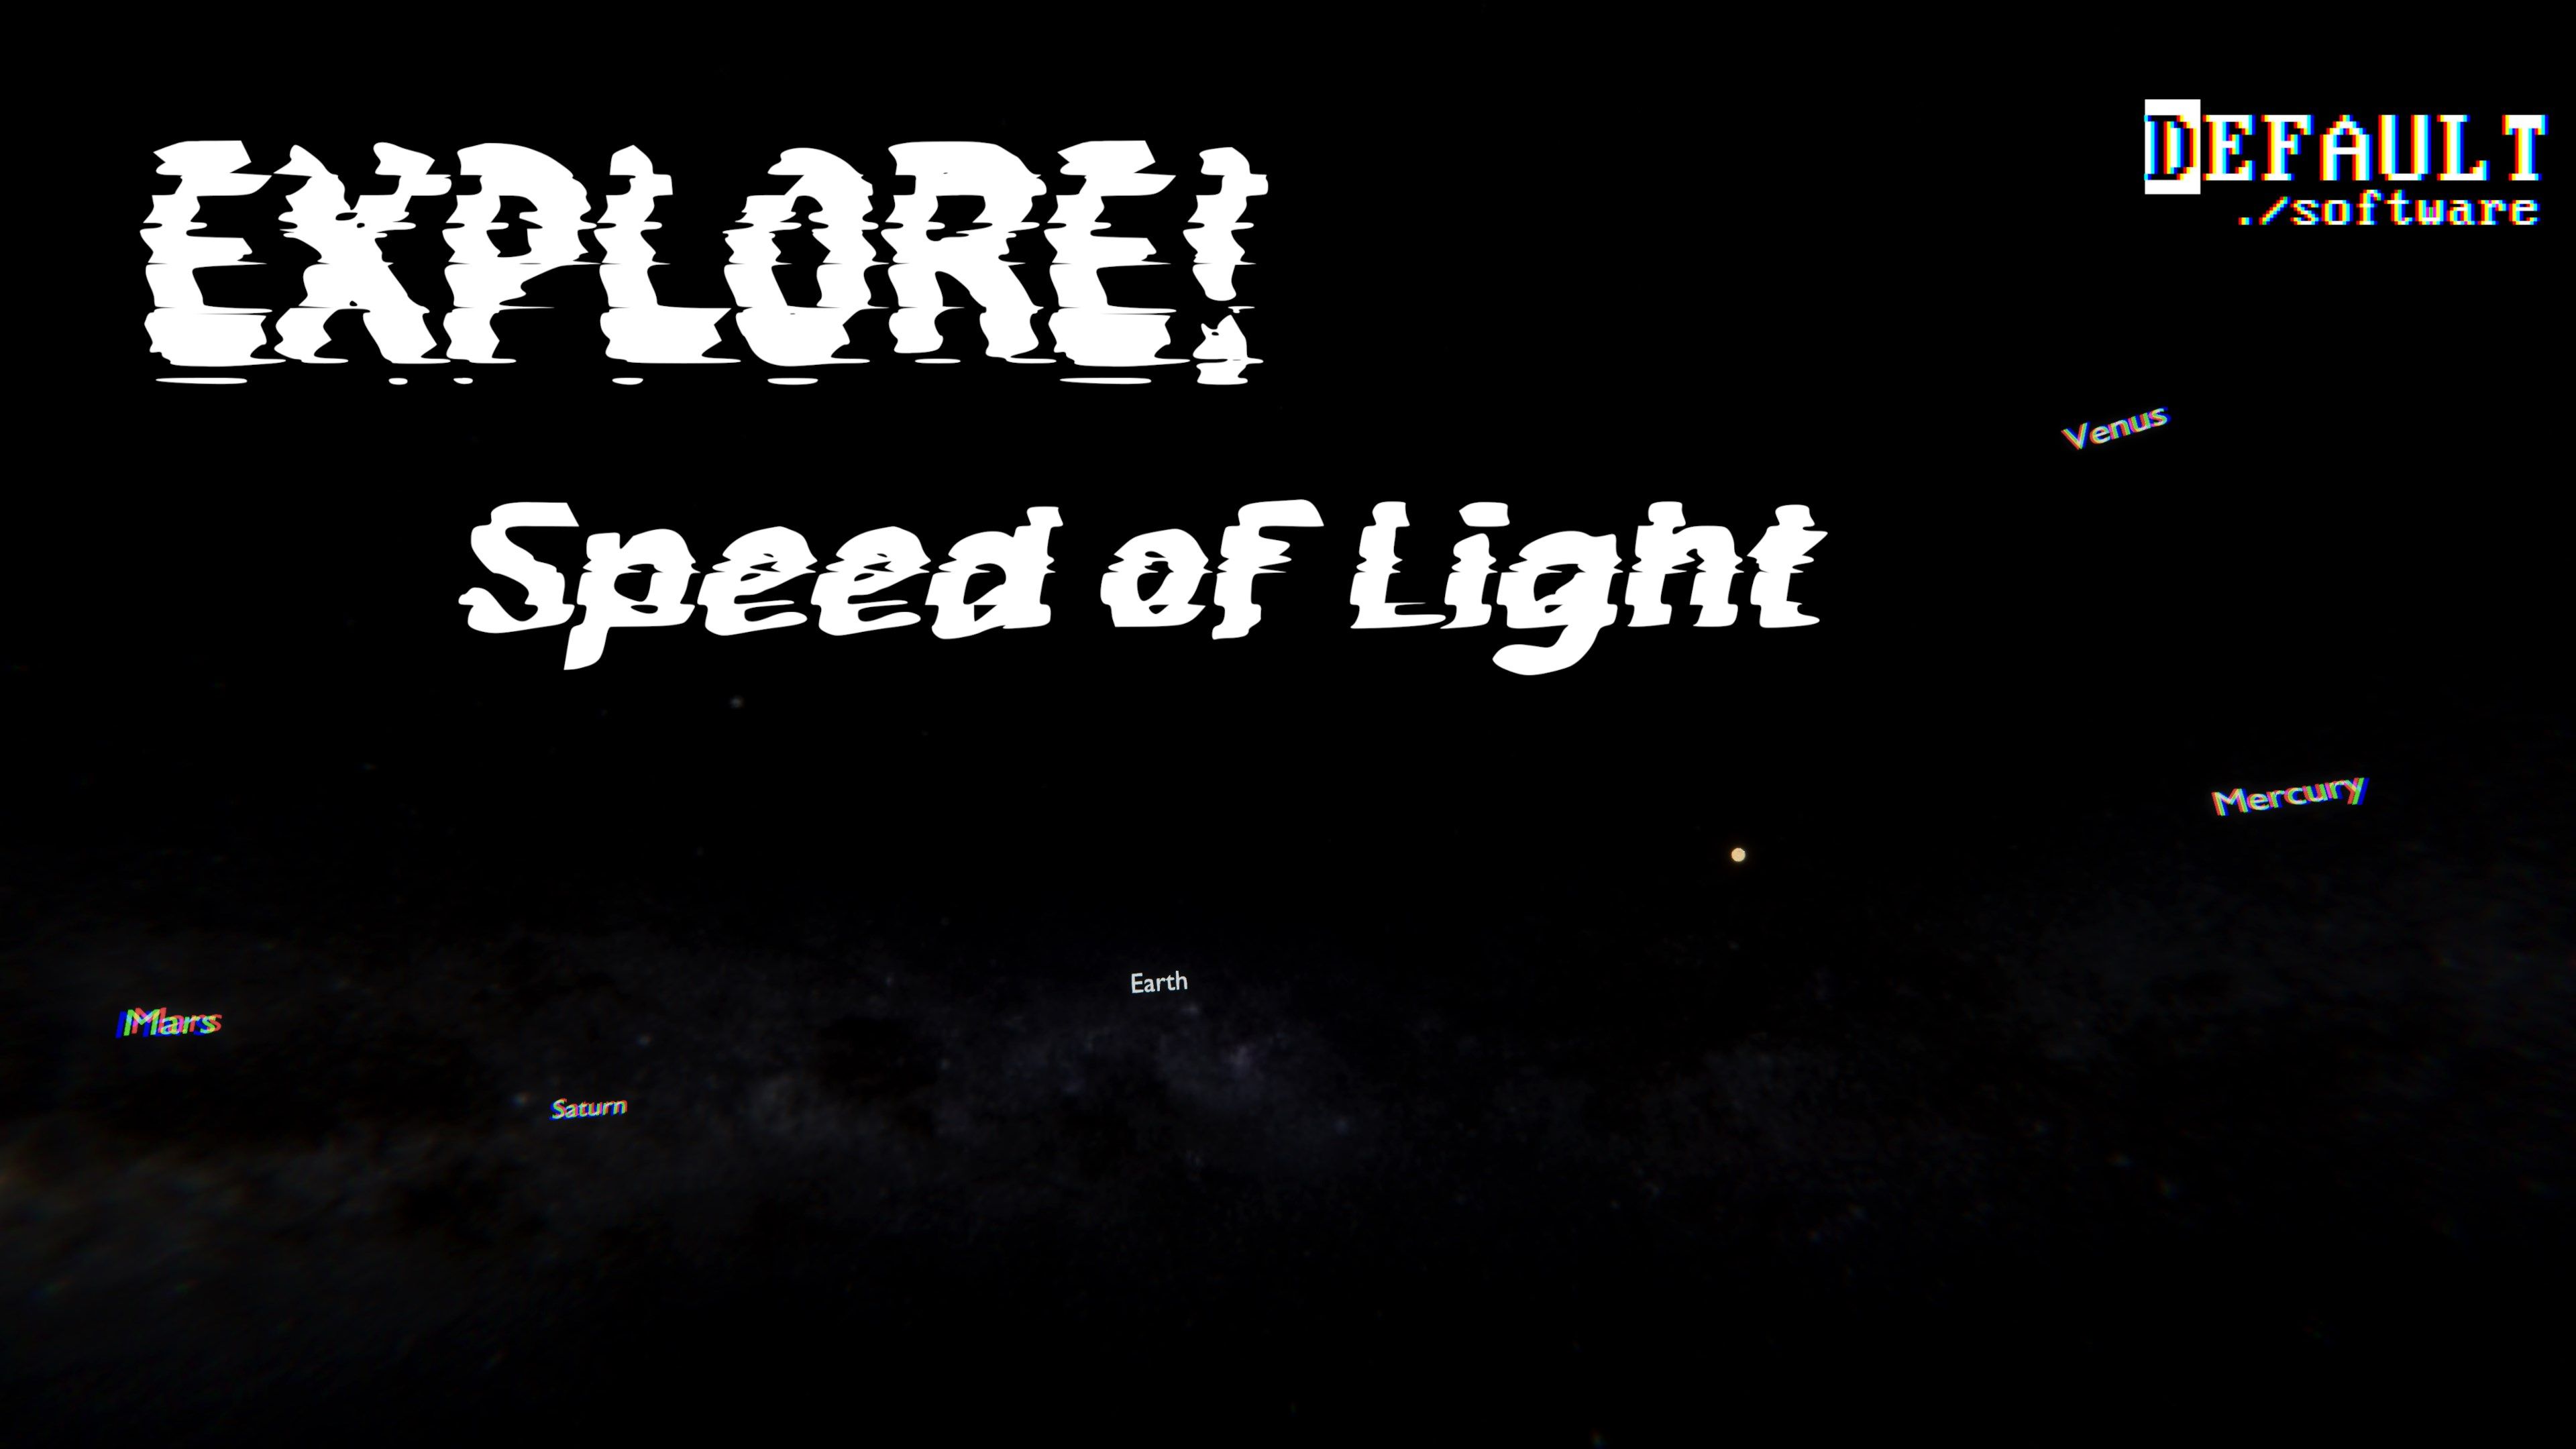 Explore! Speed of Light